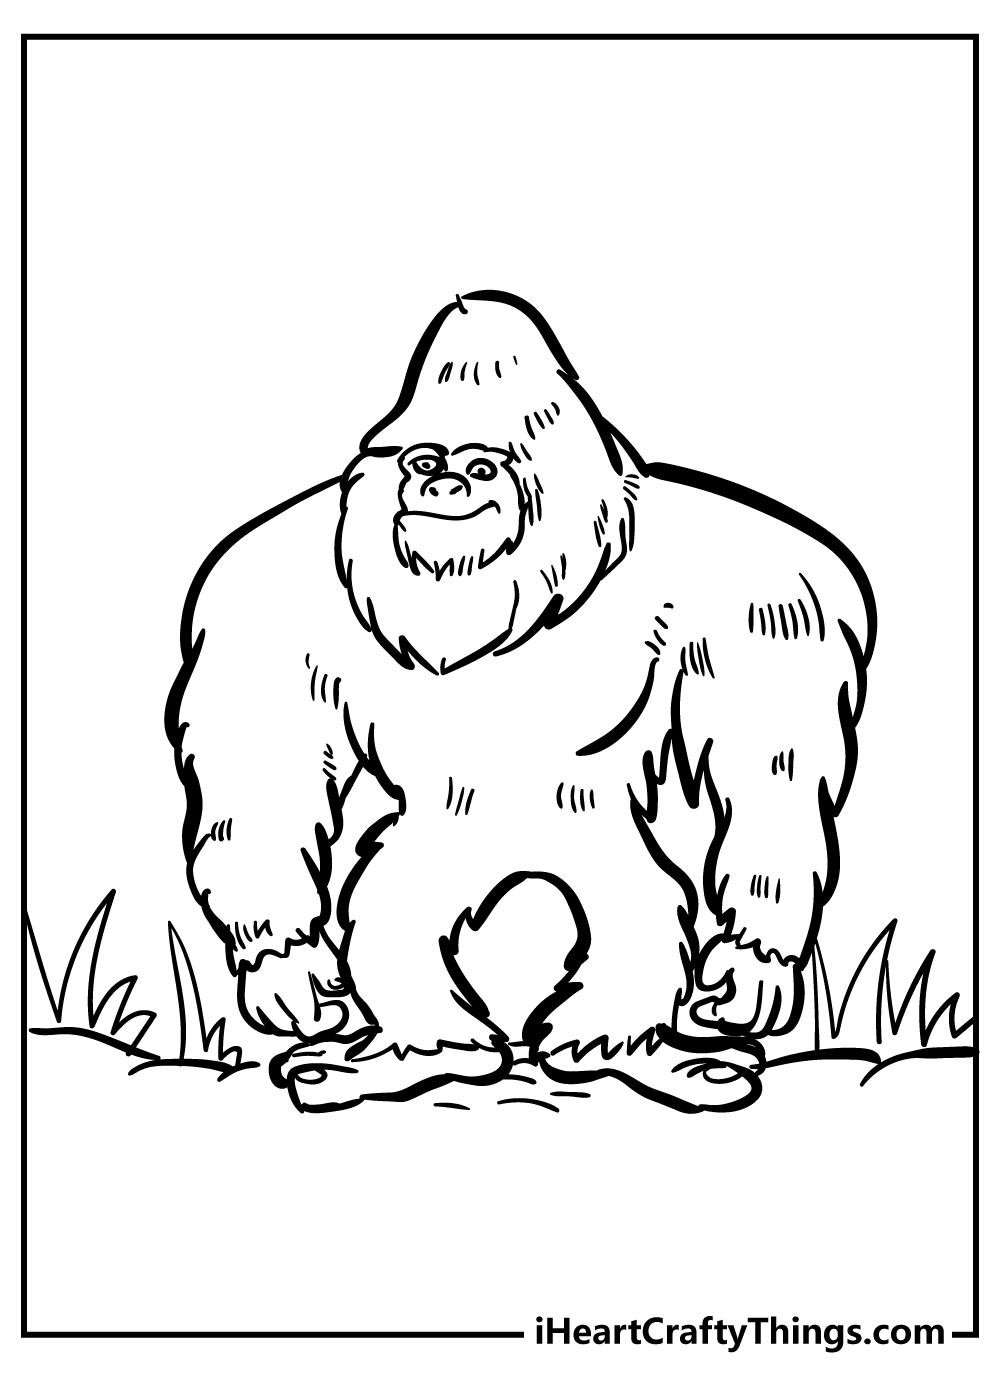 Bigfoot Coloring Pages free pdf download